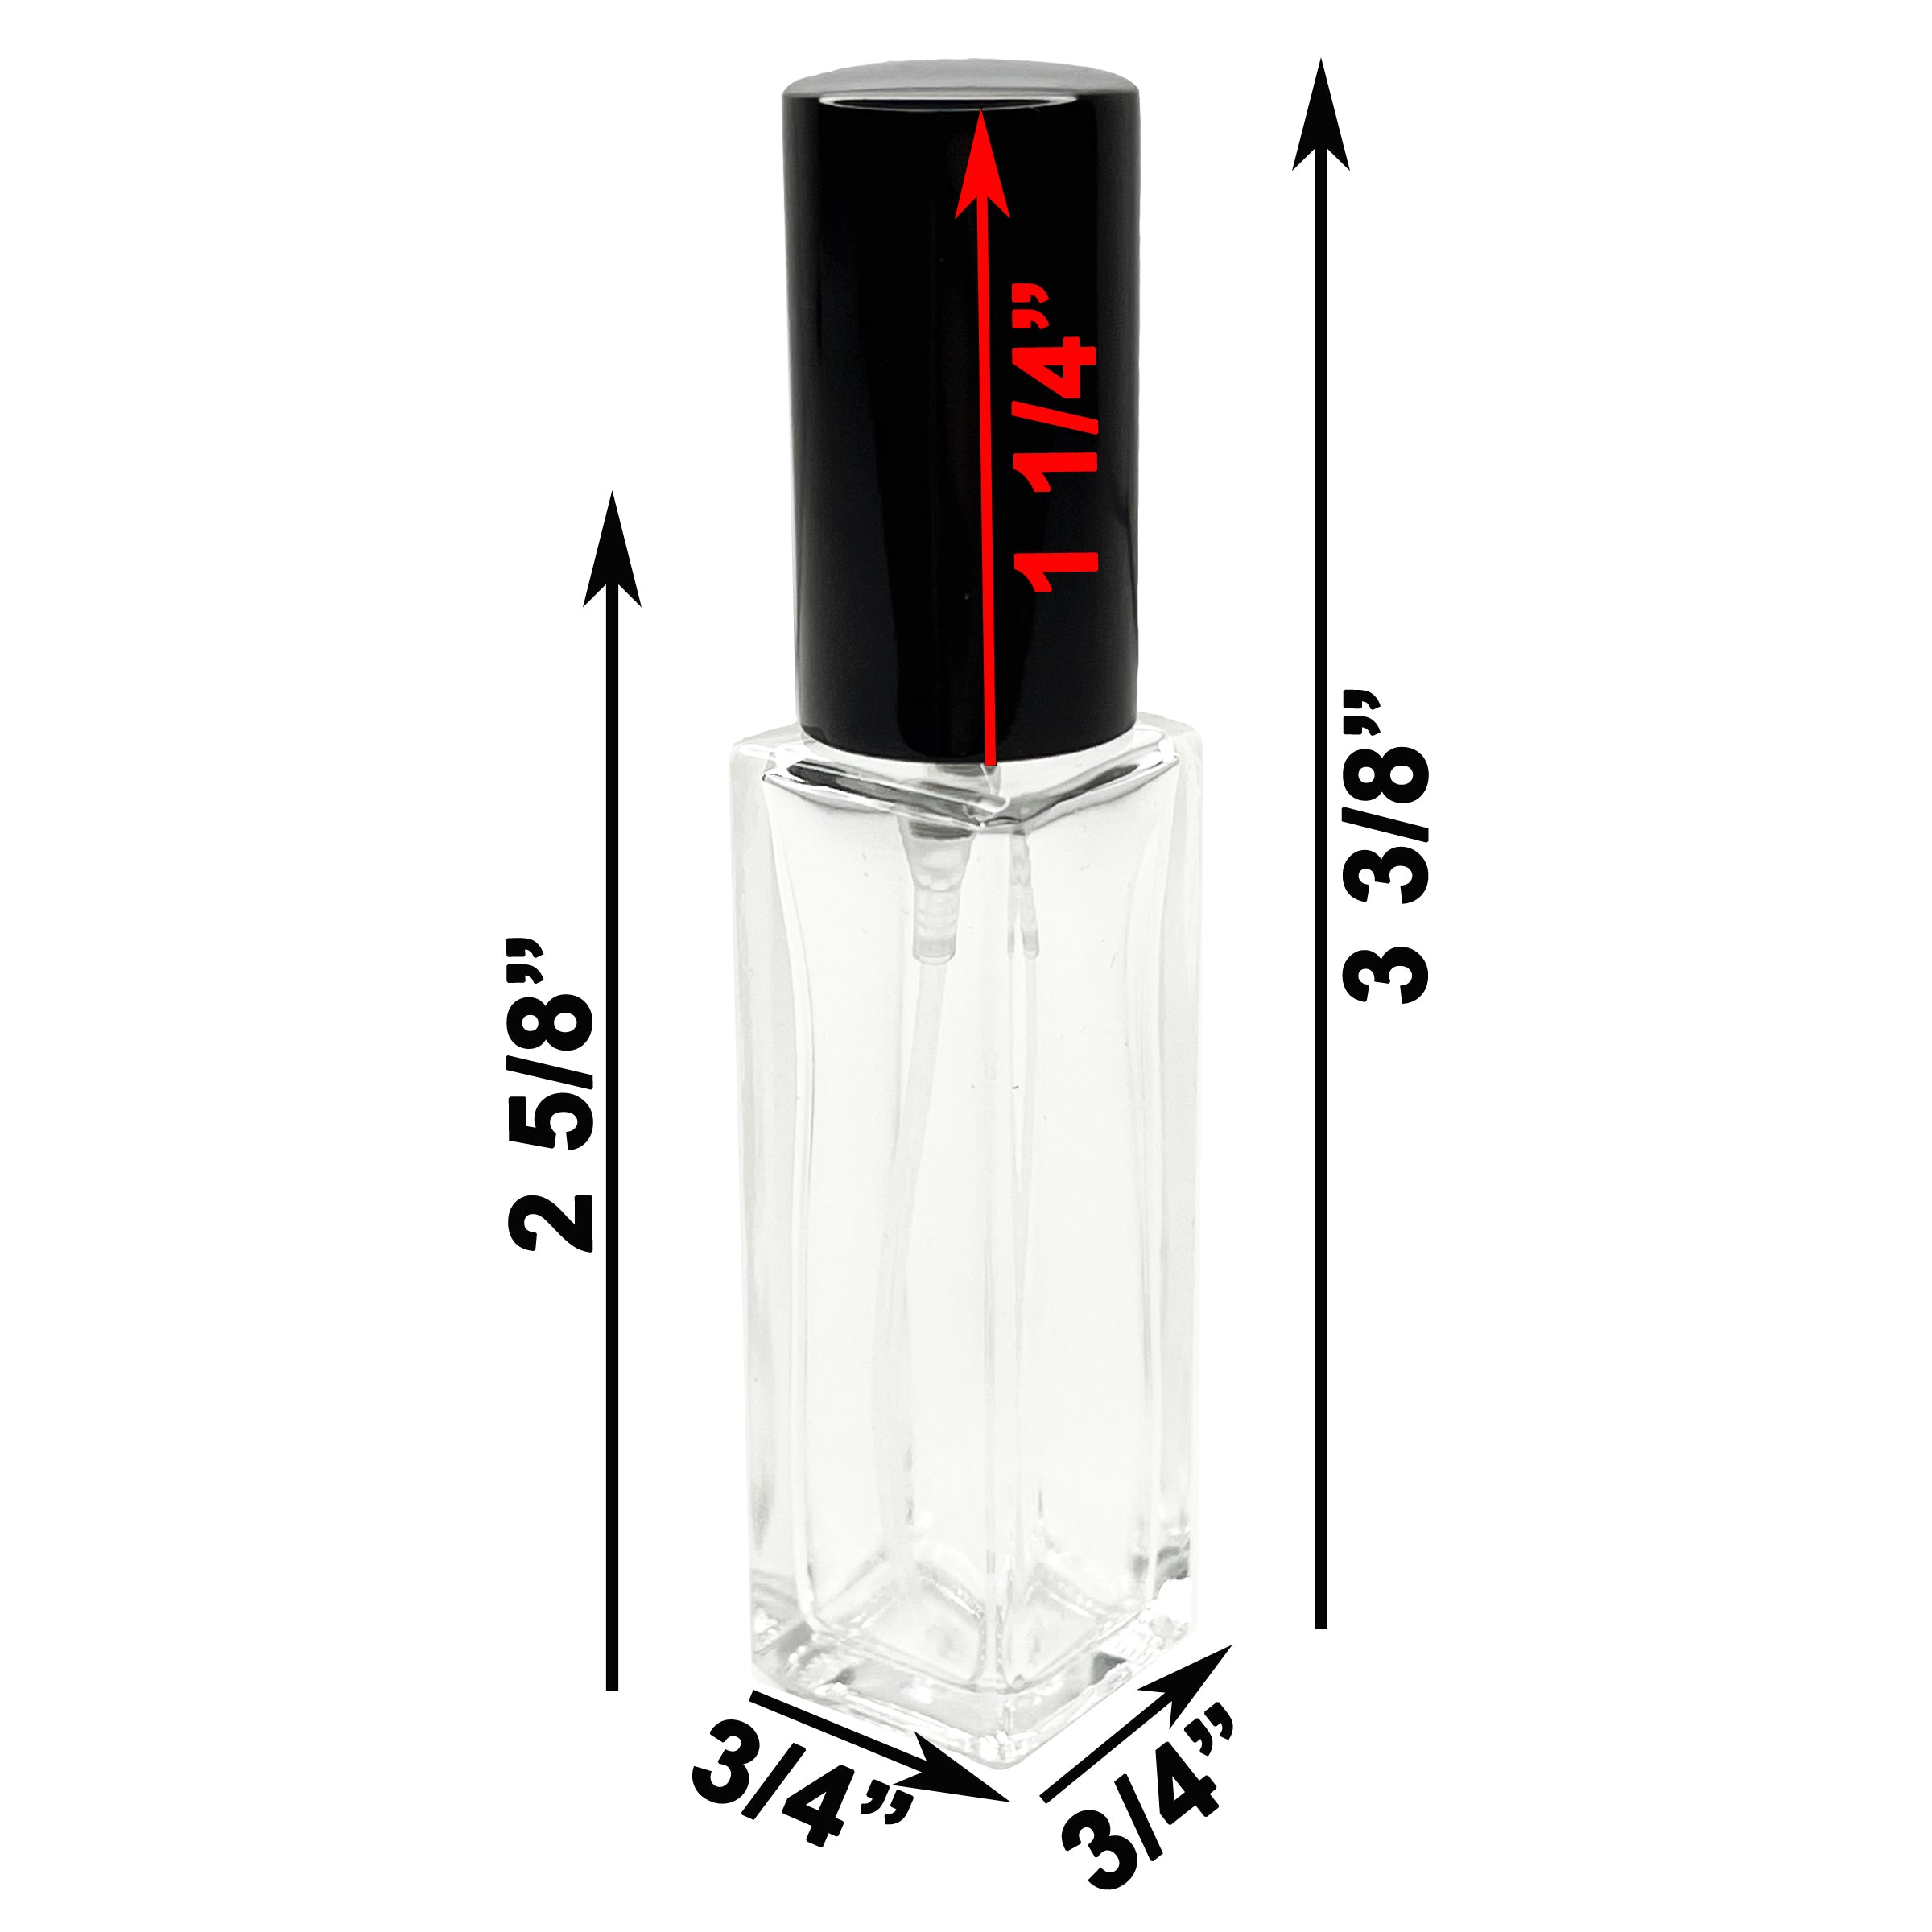 10ml 0.33oz Perfume Thick Glass Tall Spray Bottles Black Atomizers